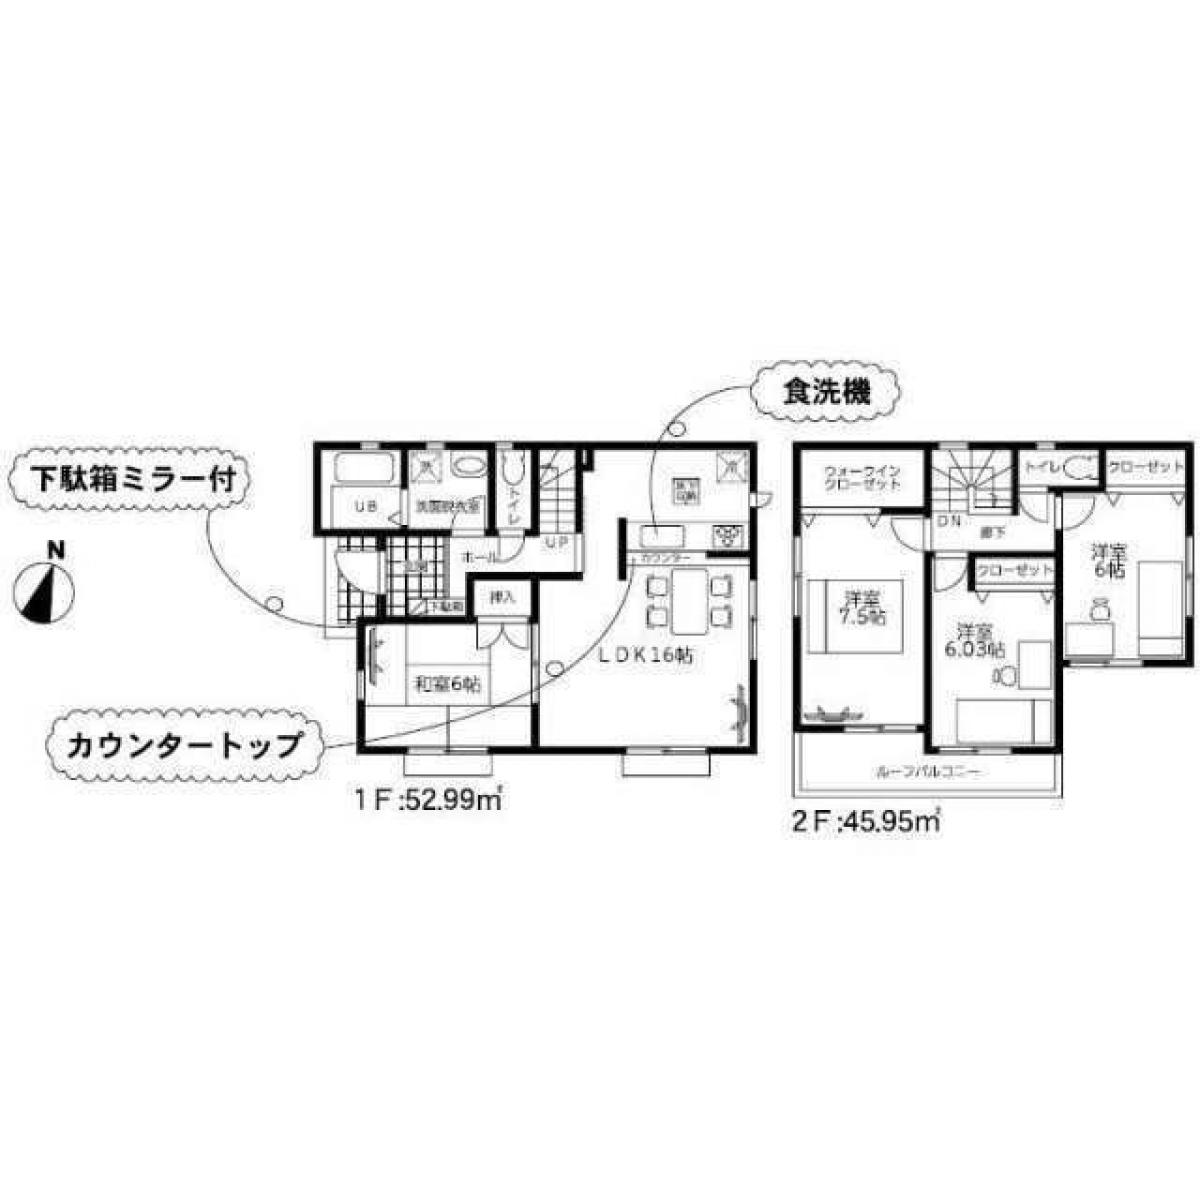 Picture of Home For Sale in Yoshikawa Shi, Saitama, Japan